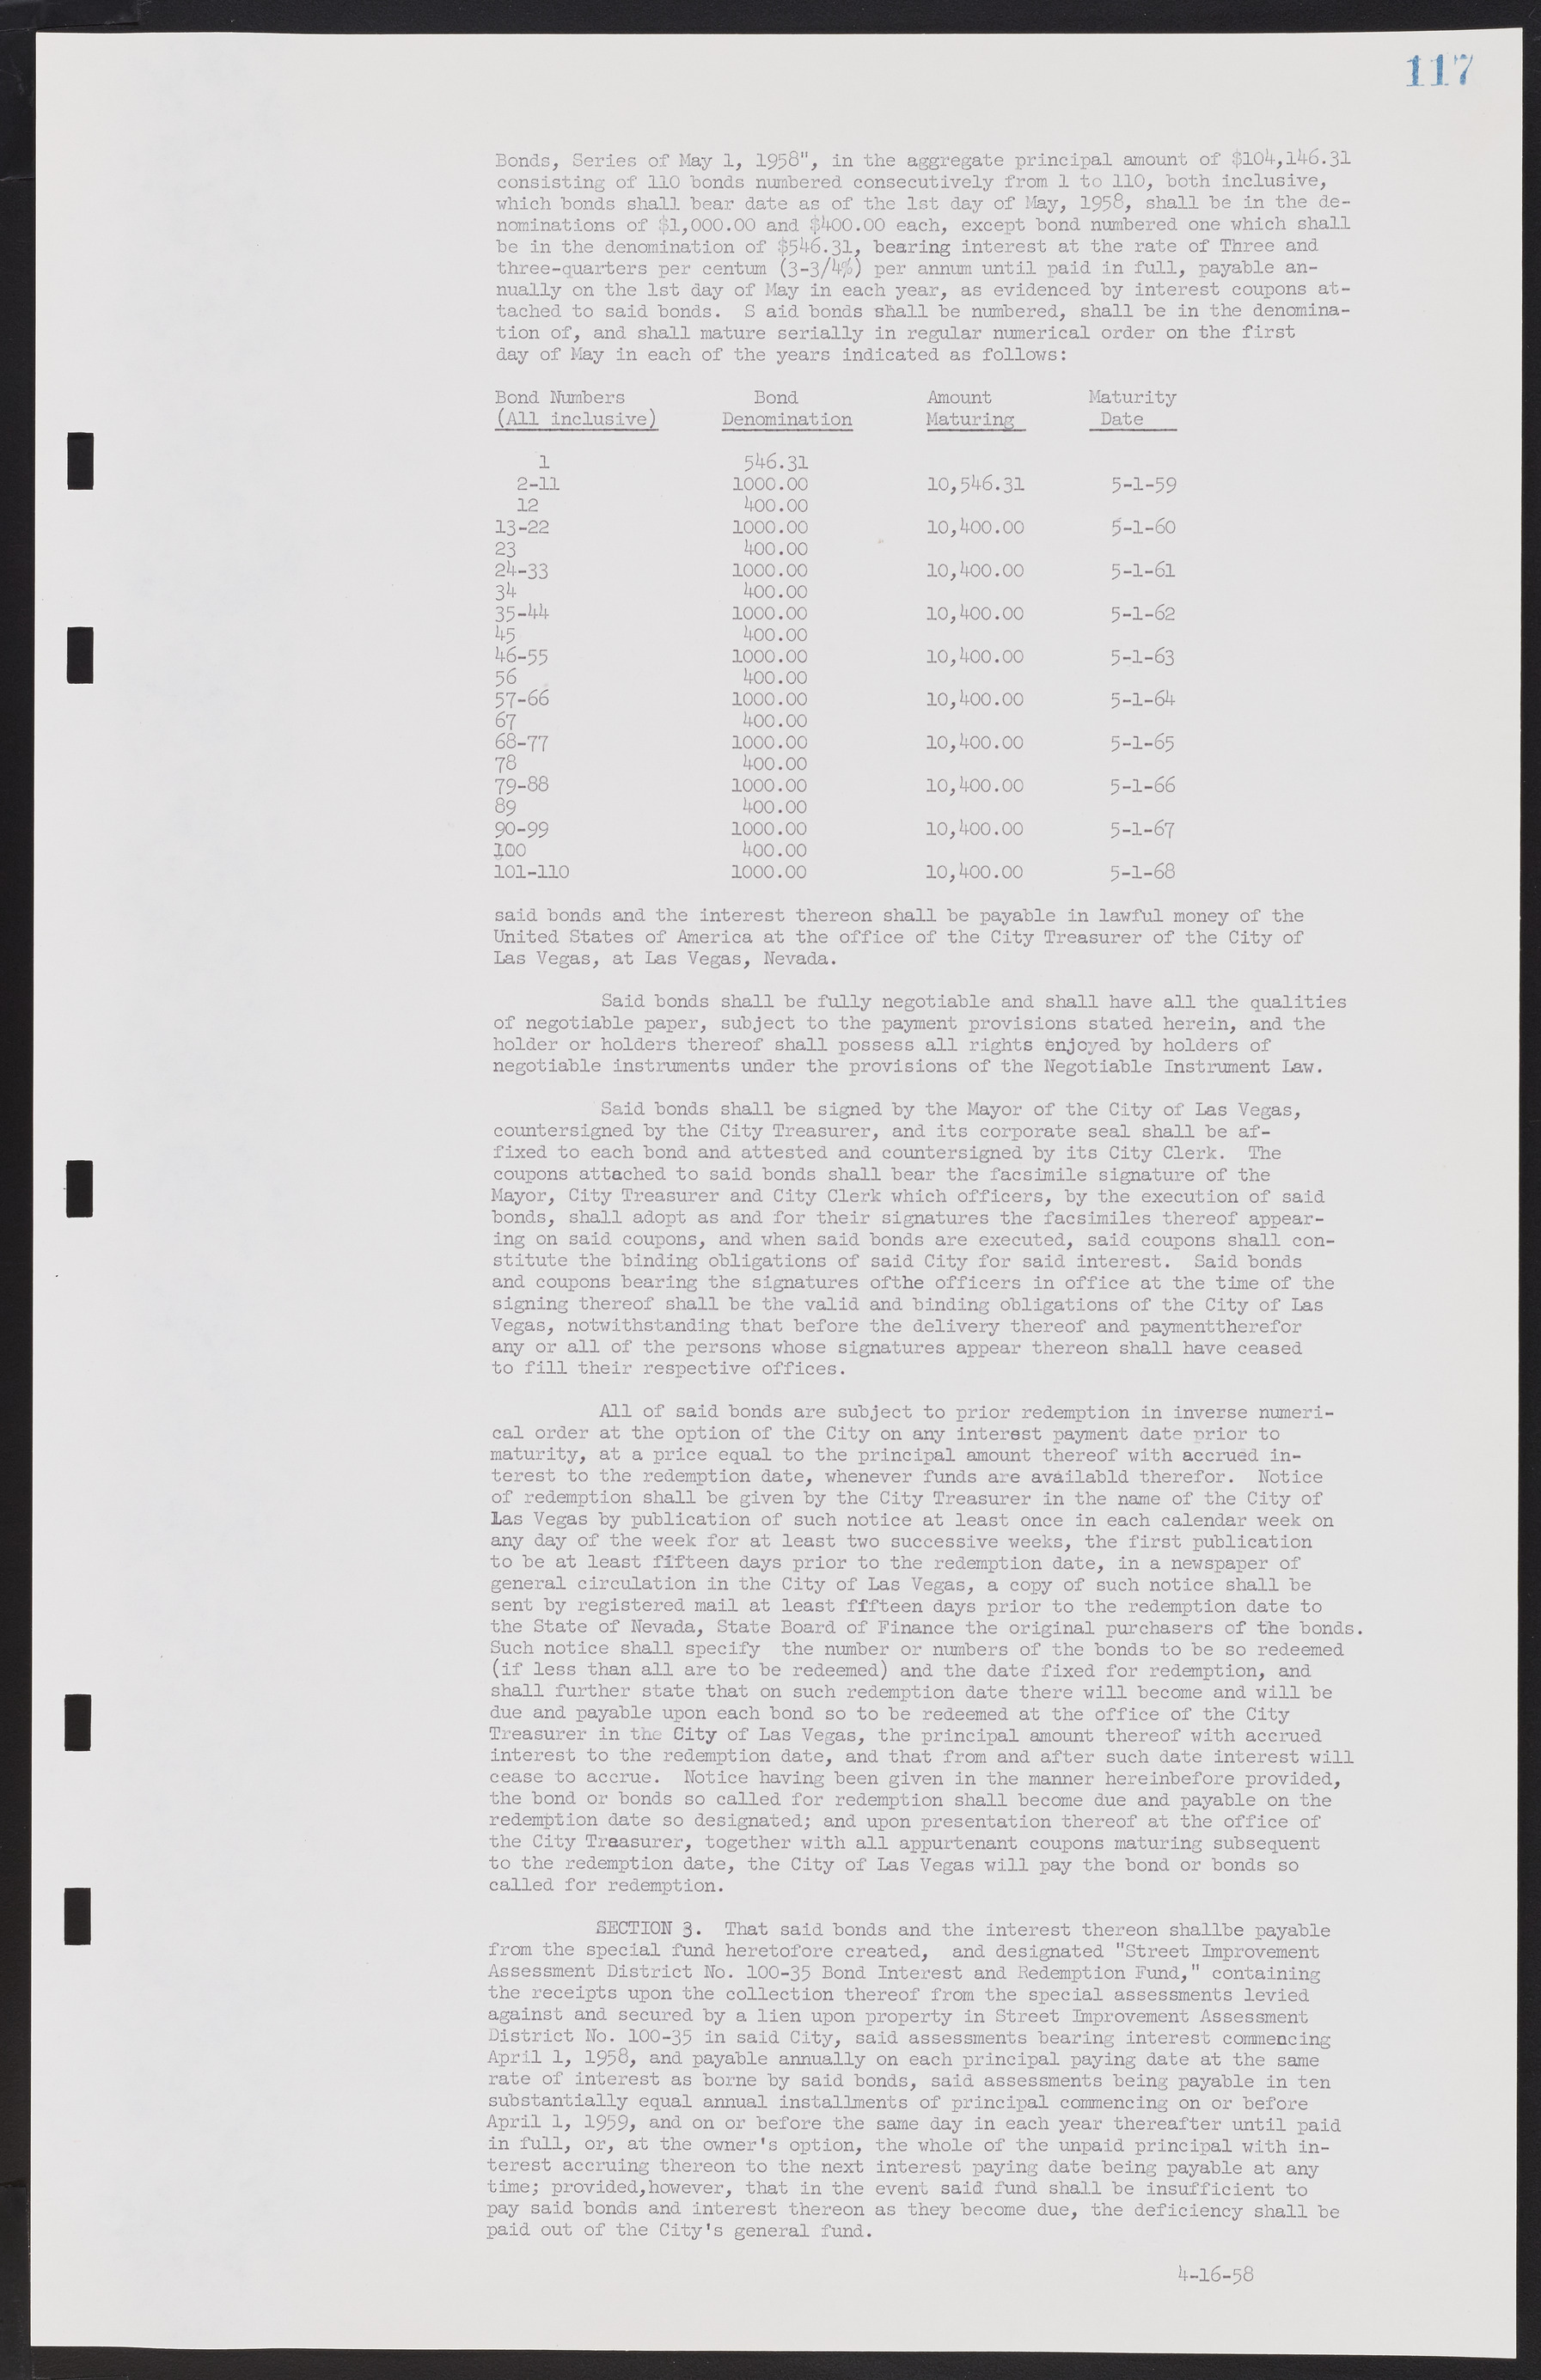 Las Vegas City Commission Minutes, November 20, 1957 to December 2, 1959, lvc000011-121